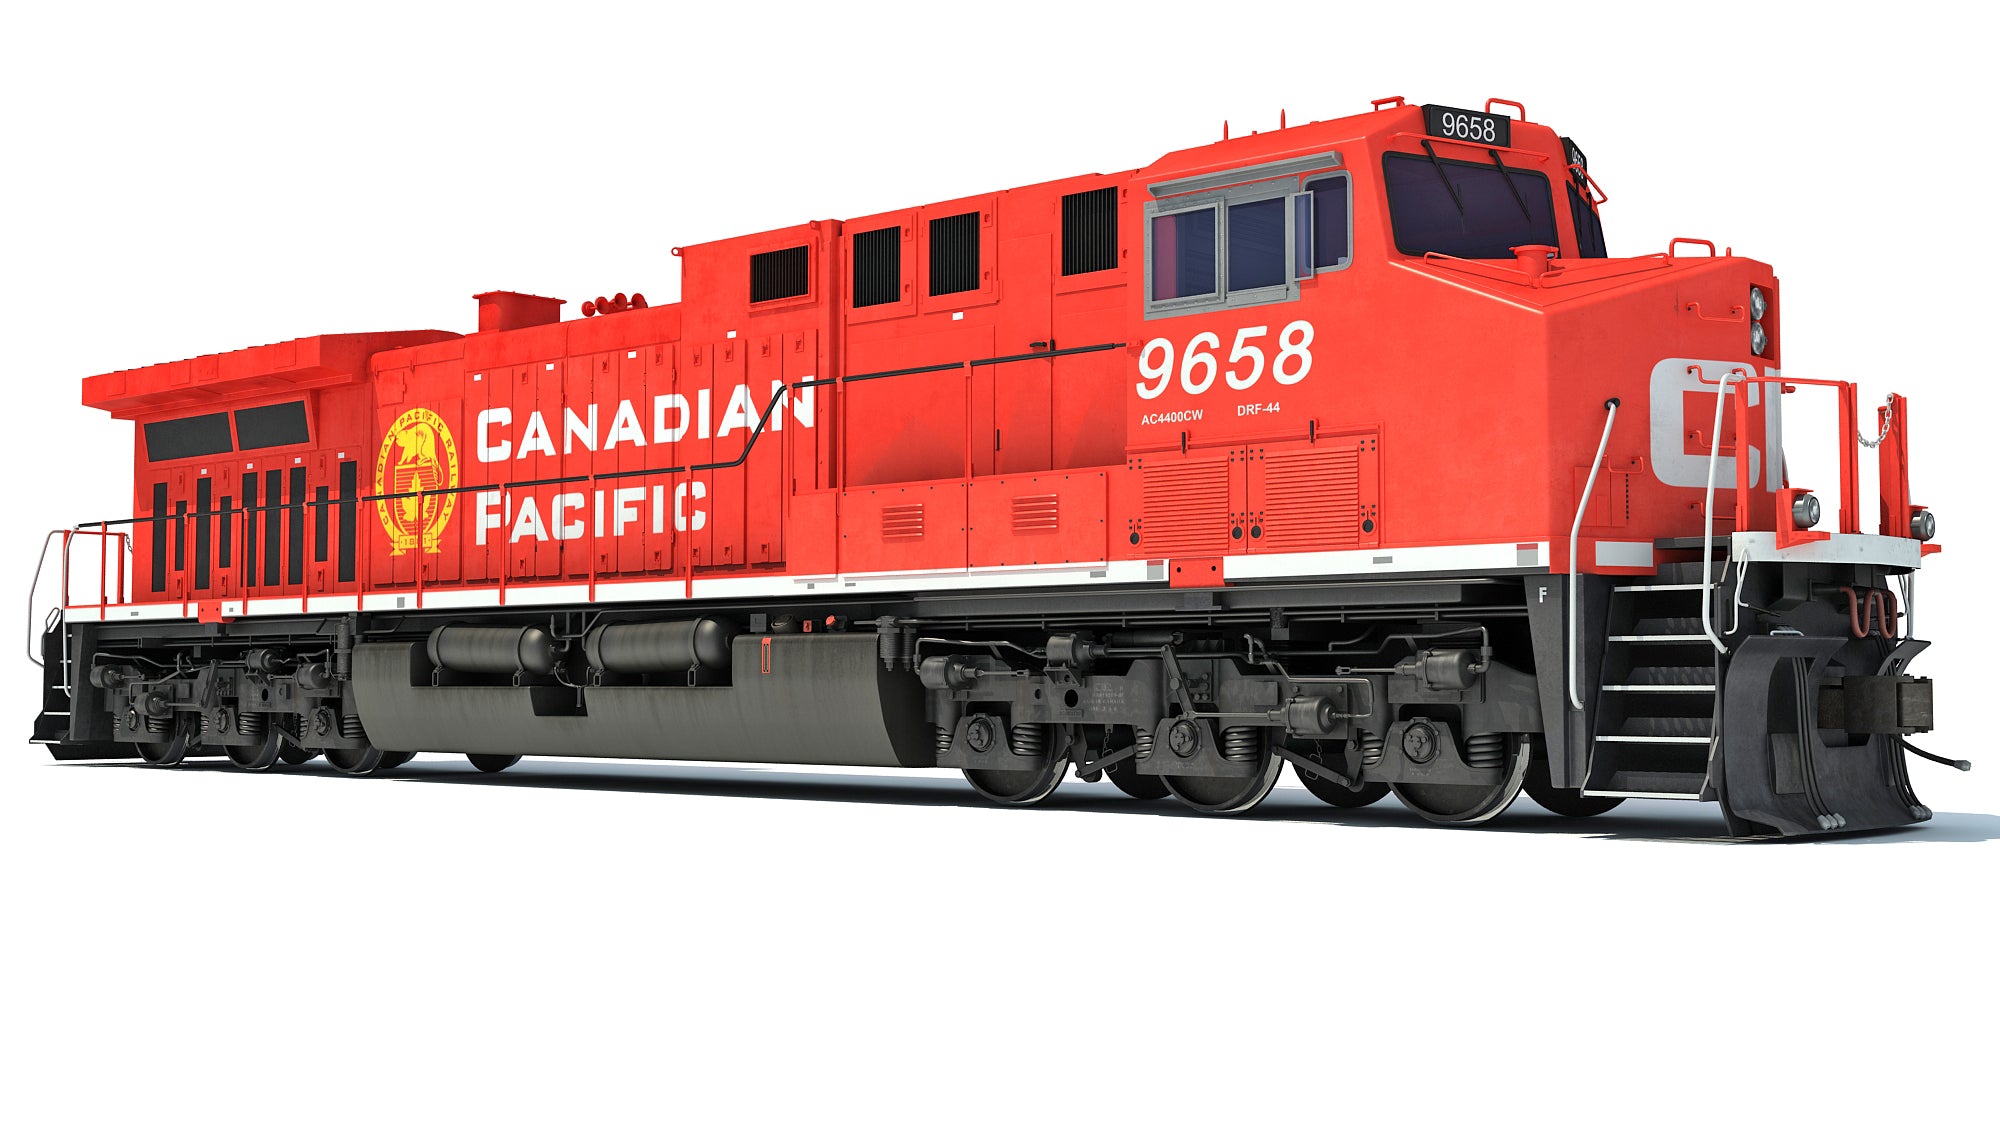 Canadian Pacific Locomotive